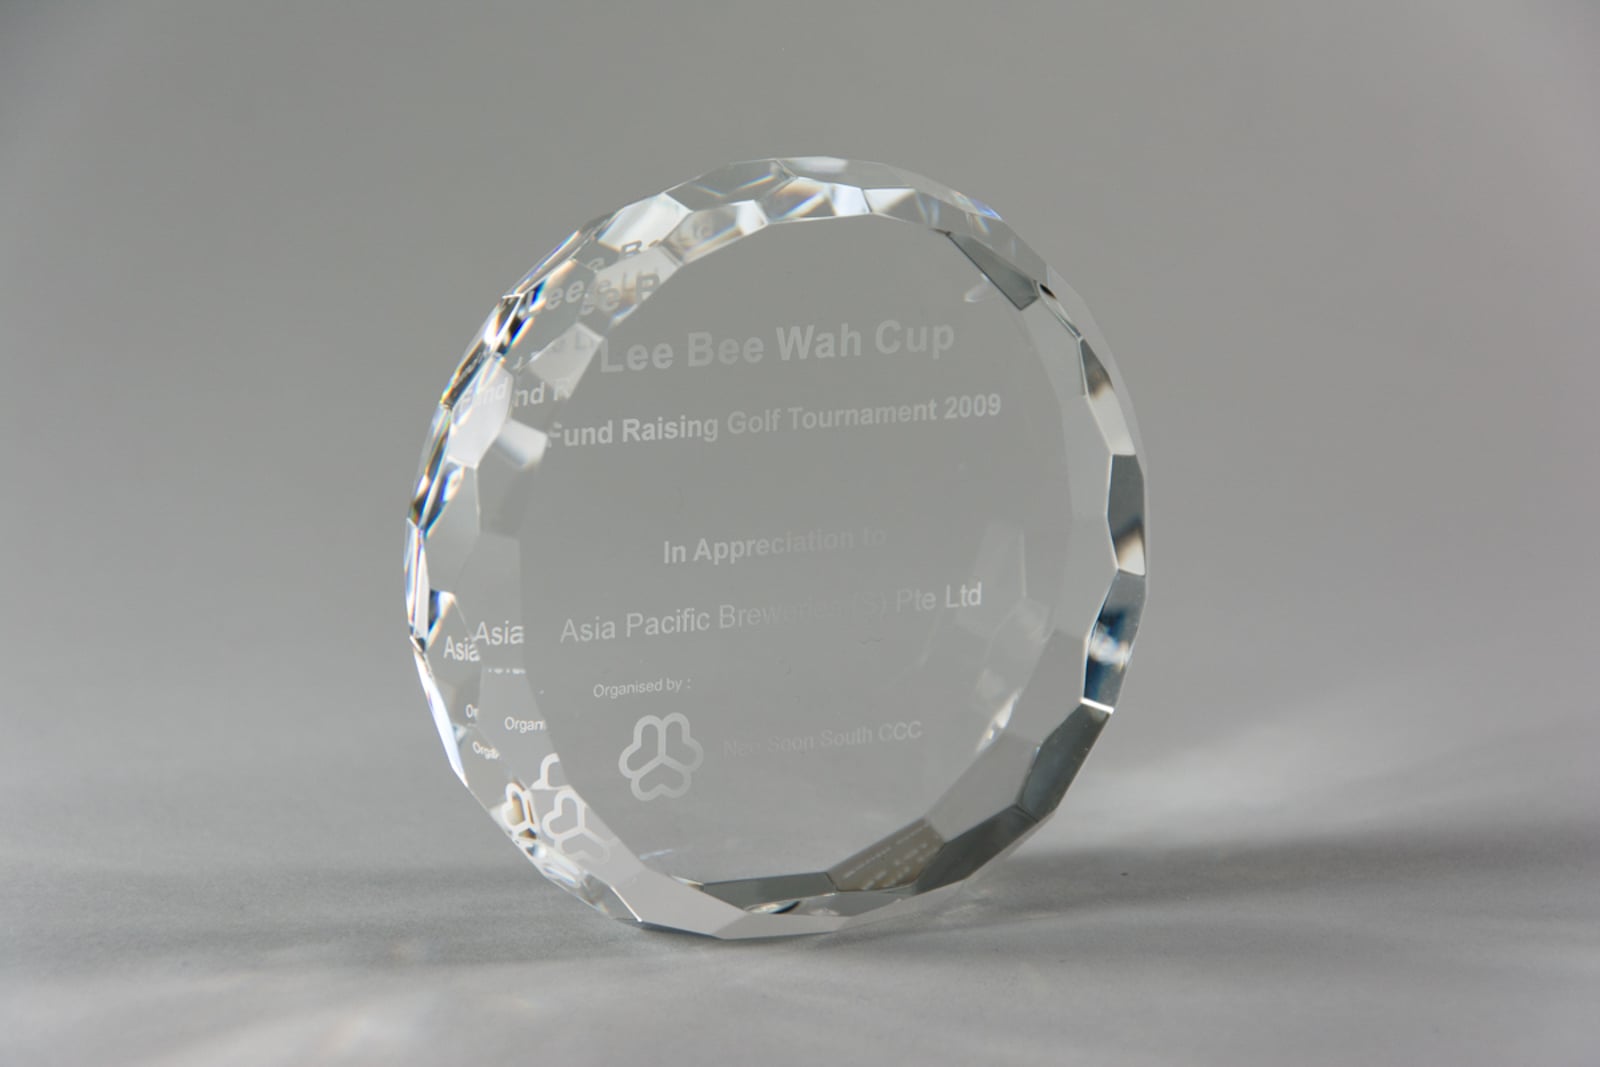 Lee Bee Wah Cup Trophy 2009